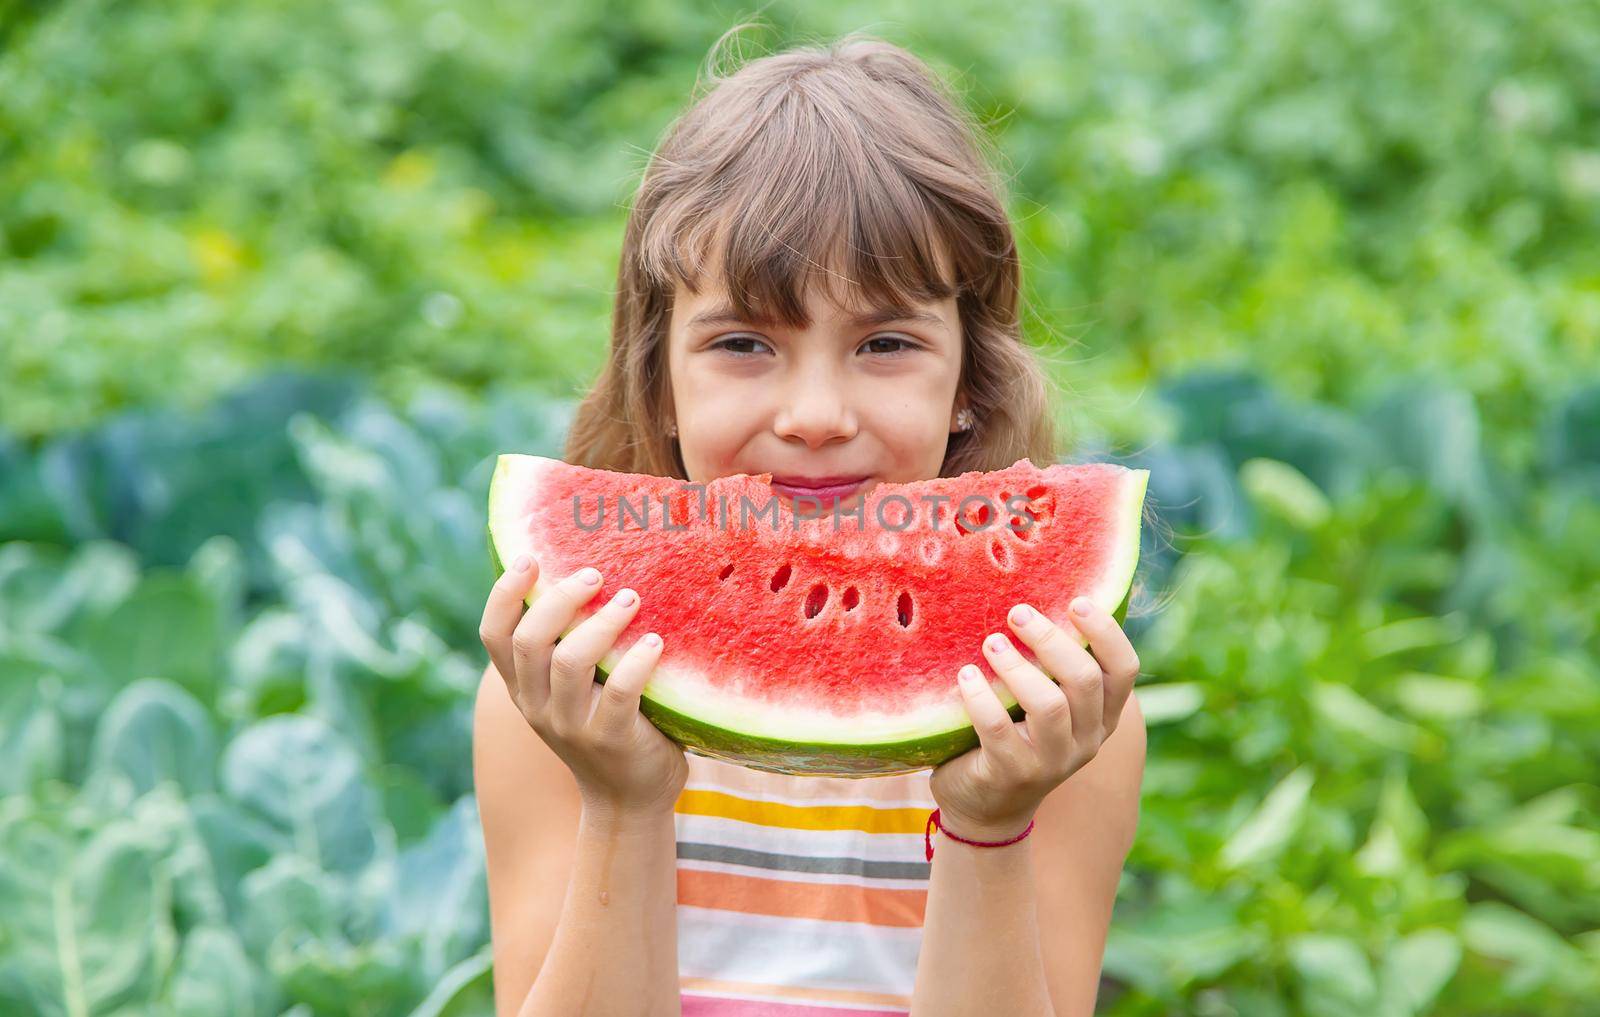 A child on a picnic eats a watermelon. Selective focus.